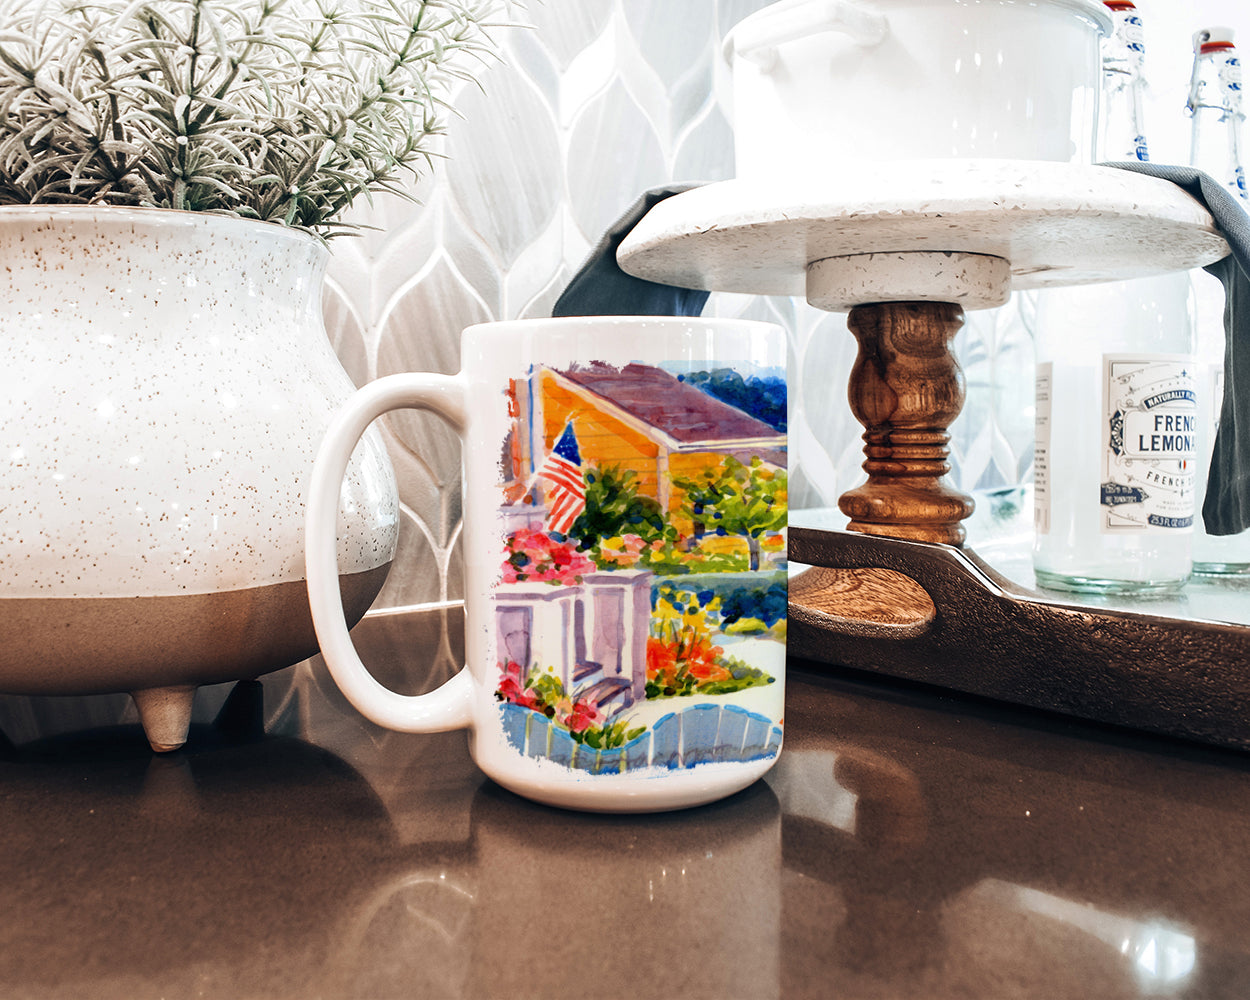 Seaside Beach Cottage Dishwasher Safe Microwavable Ceramic Coffee Mug 15 ounce 6032CM15